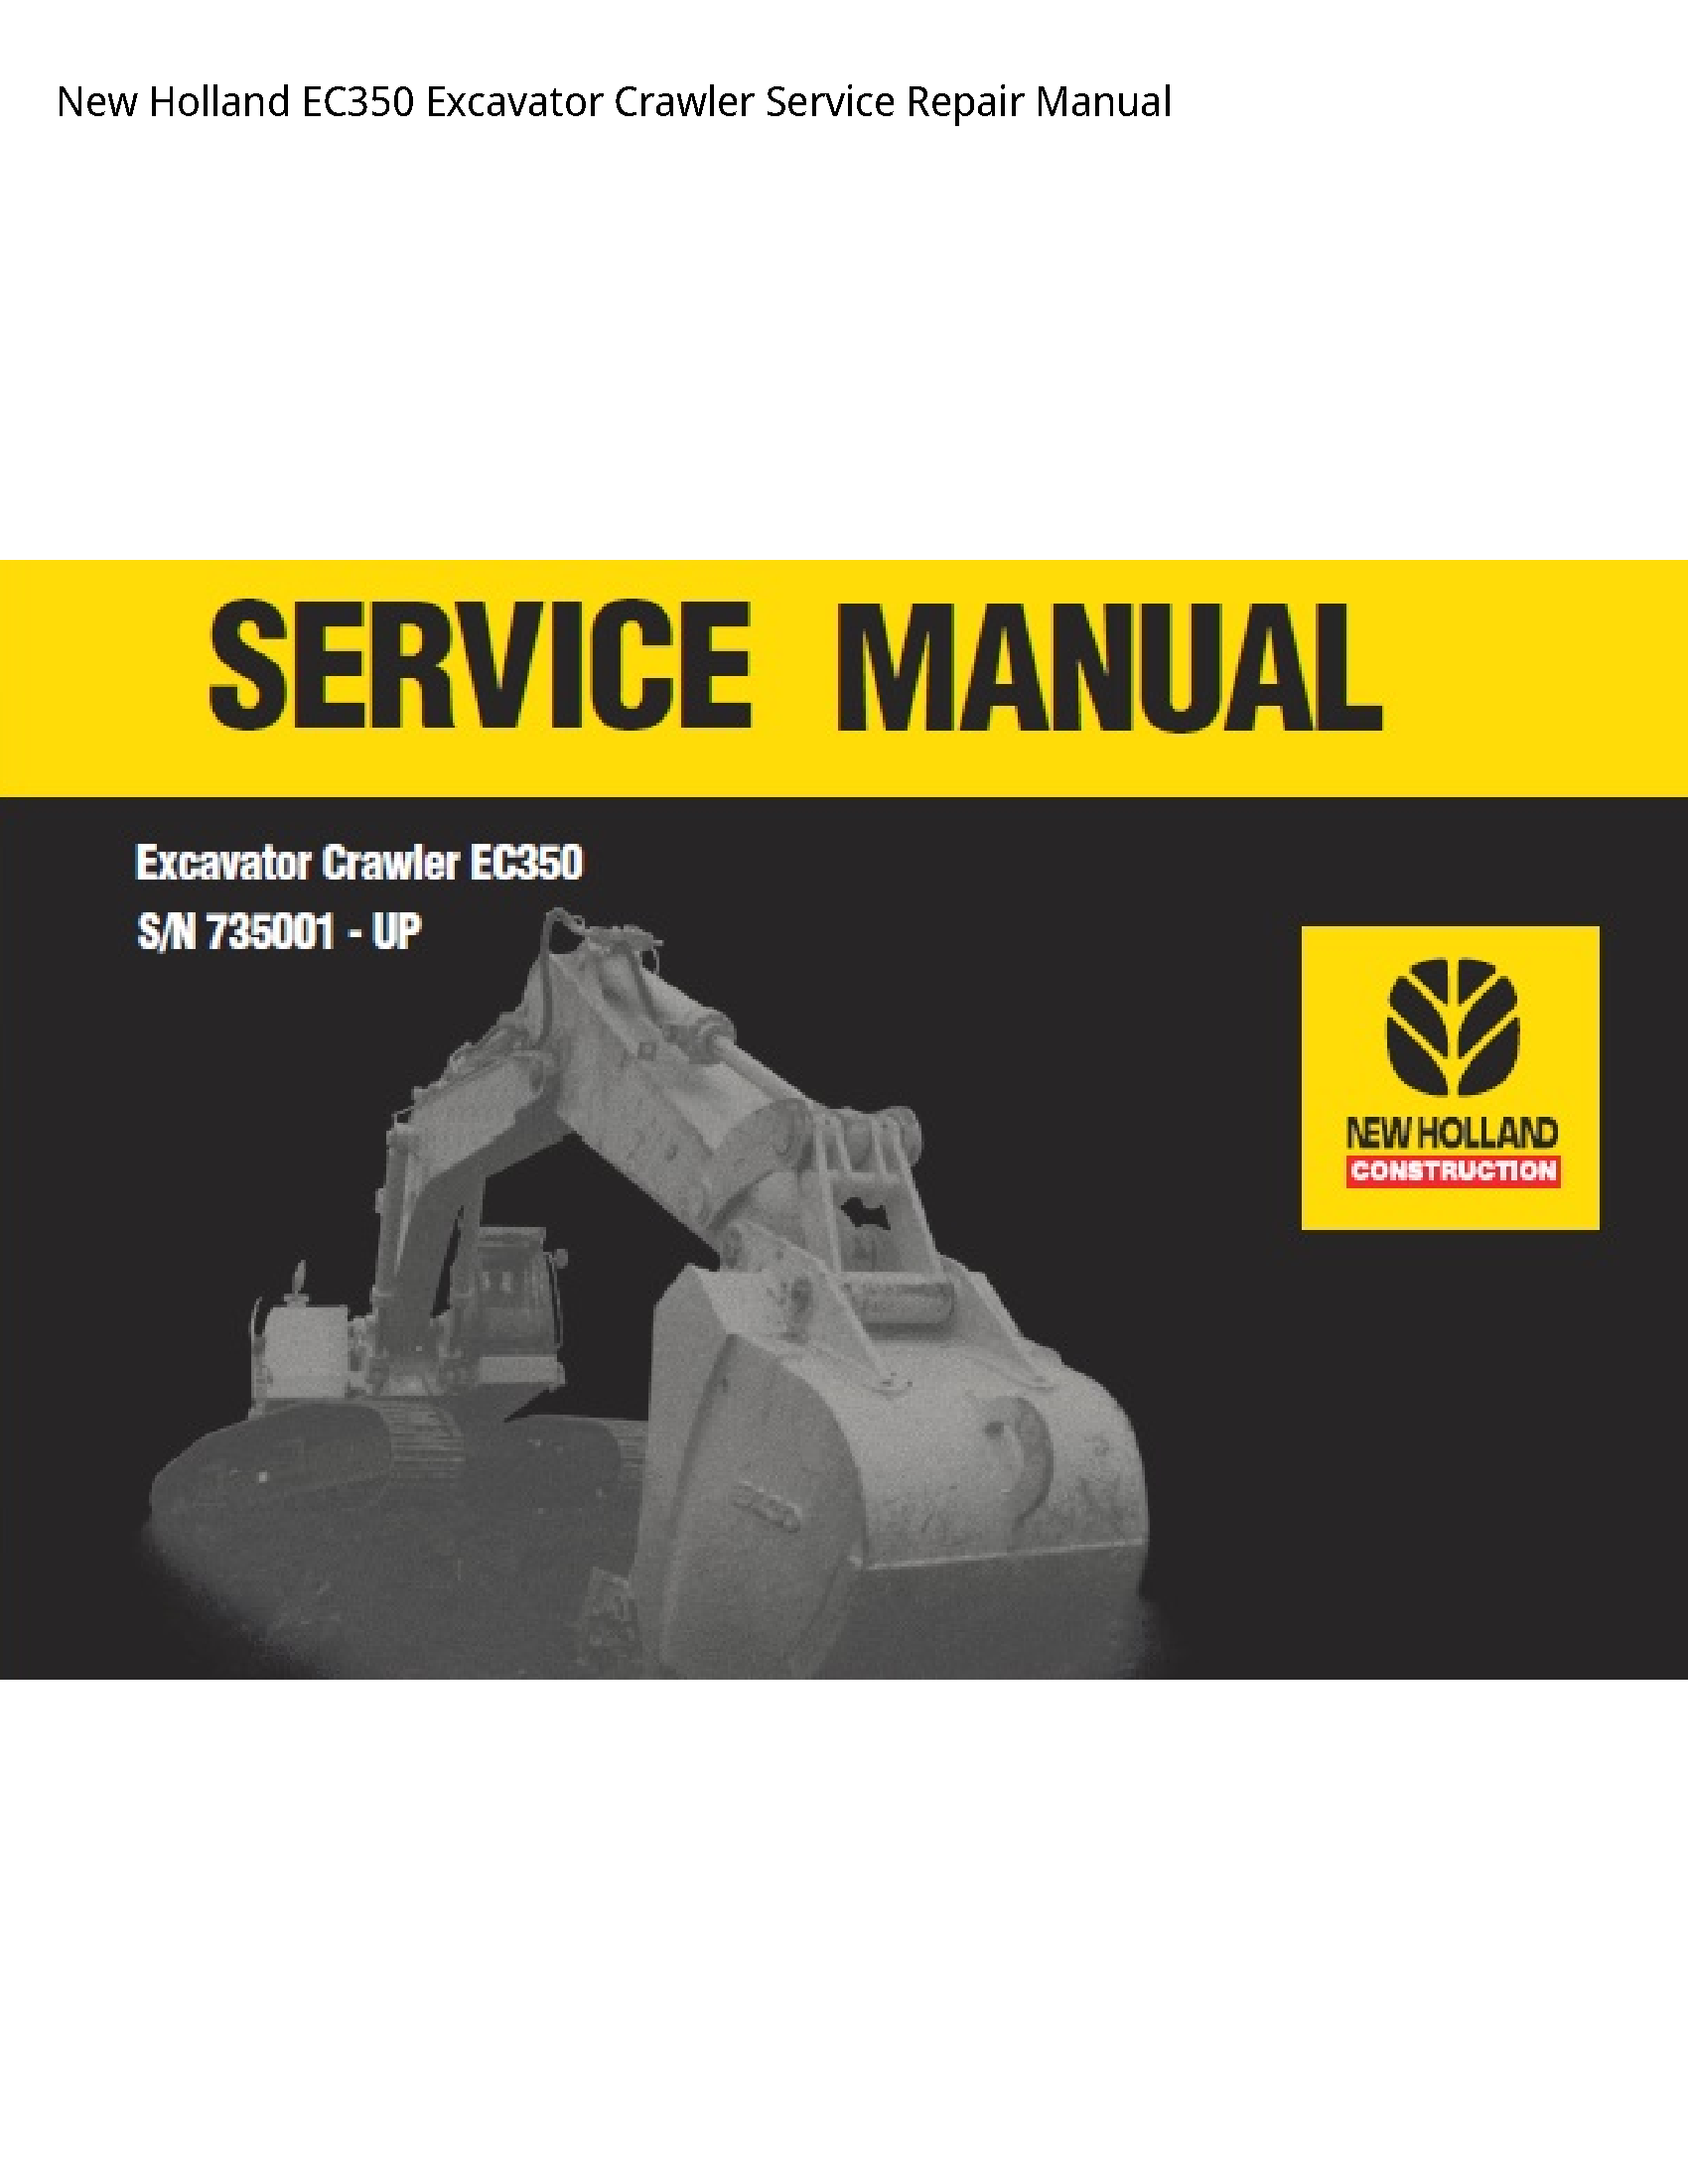 New Holland EC350 Excavator Crawler manual